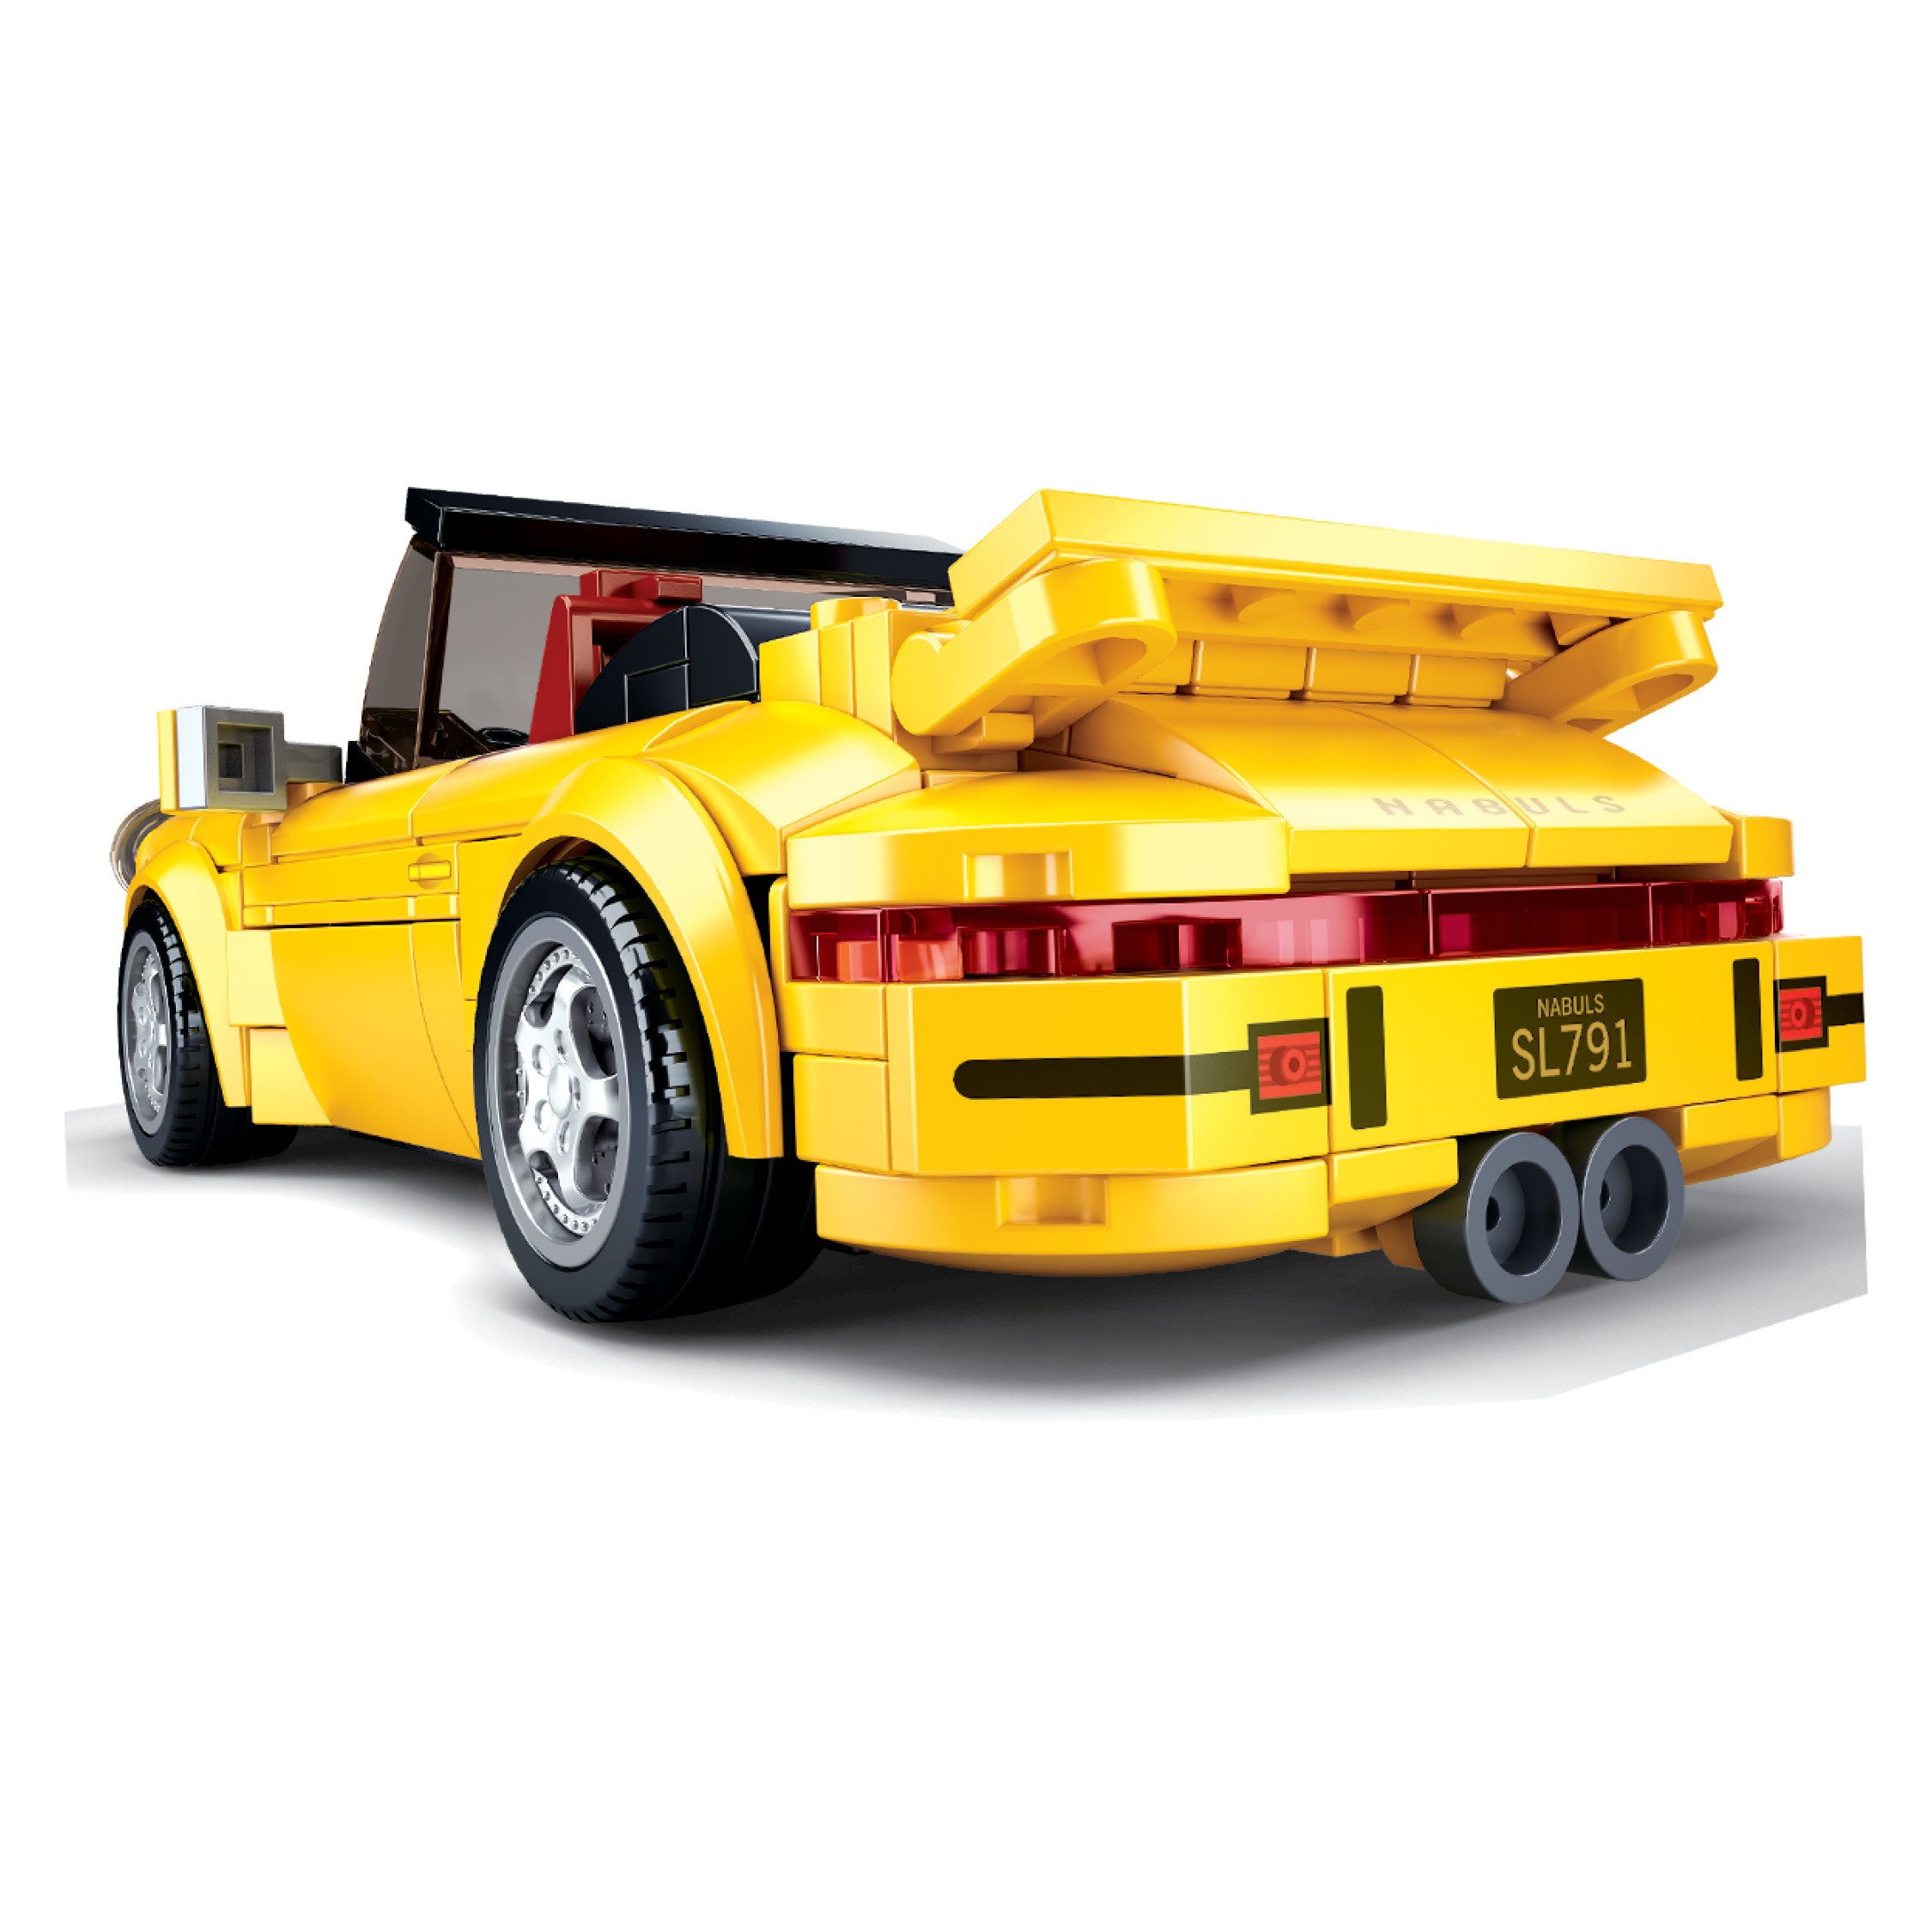 SLUBAN® MODELBRICKS-930 Sport Car – 290 pcs (M38-B1097) Building Blocks Kit For Boys And Girls Aged 8 Years And Above Creative Construction Set Educational STEM Toy